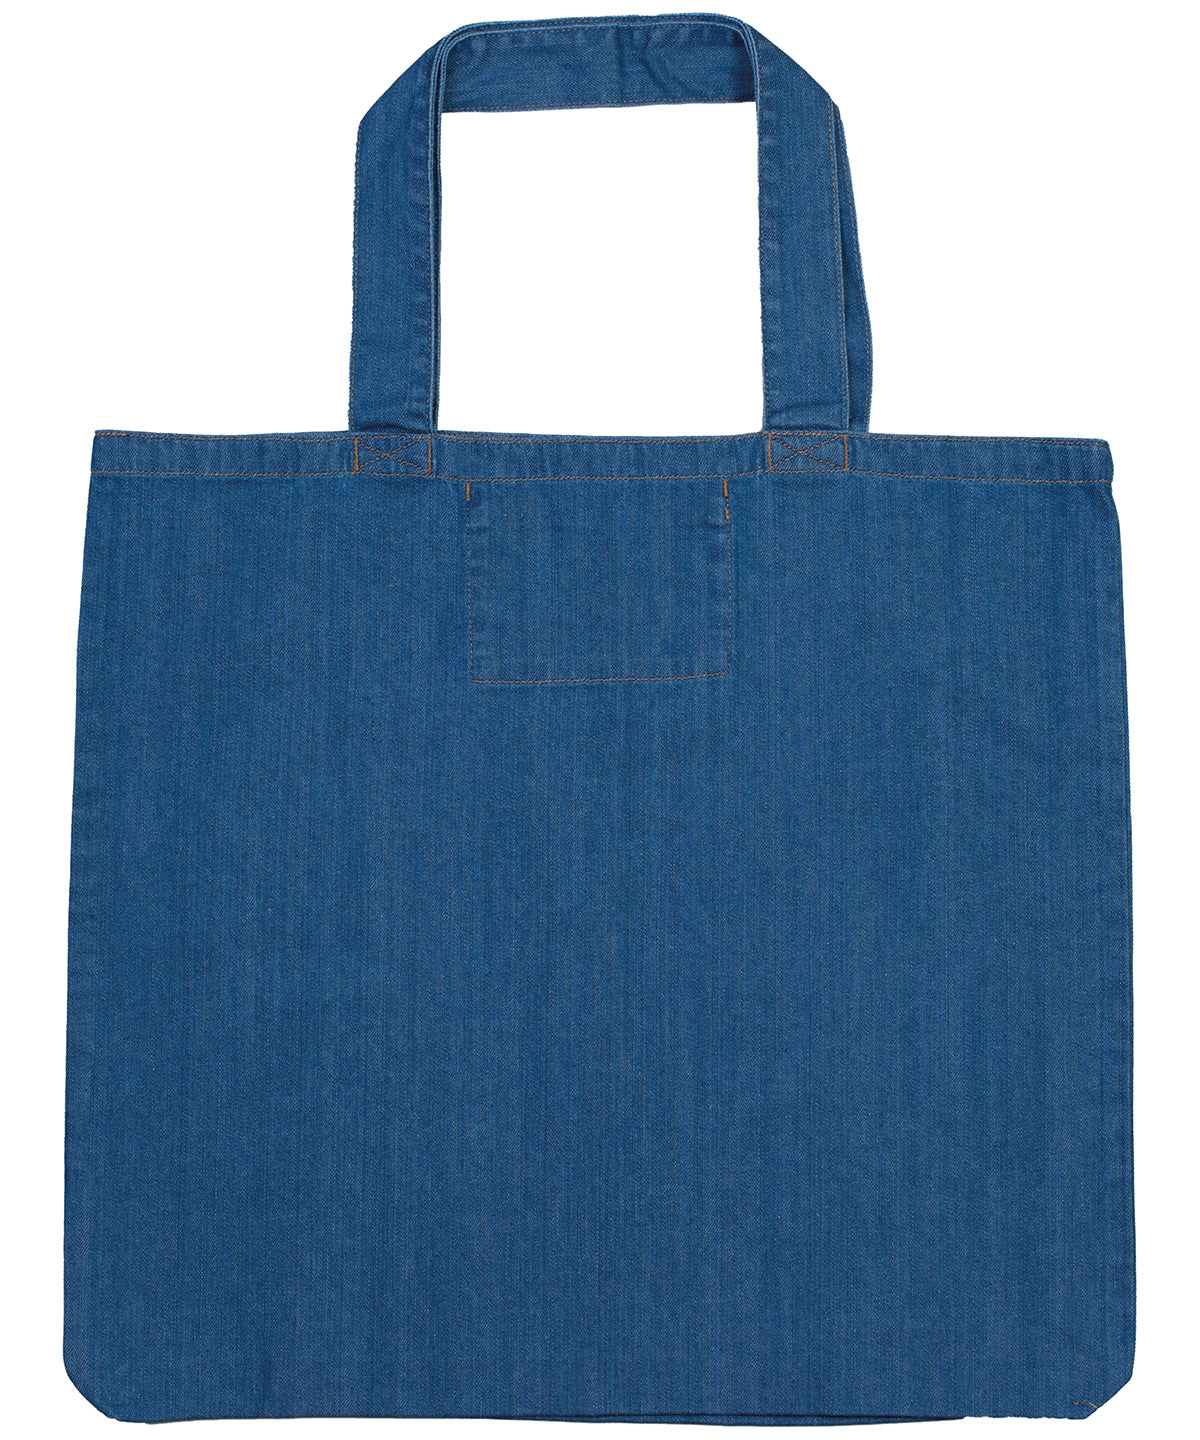 Personalised Bags - Mid Blue Babybugz Denim shopper